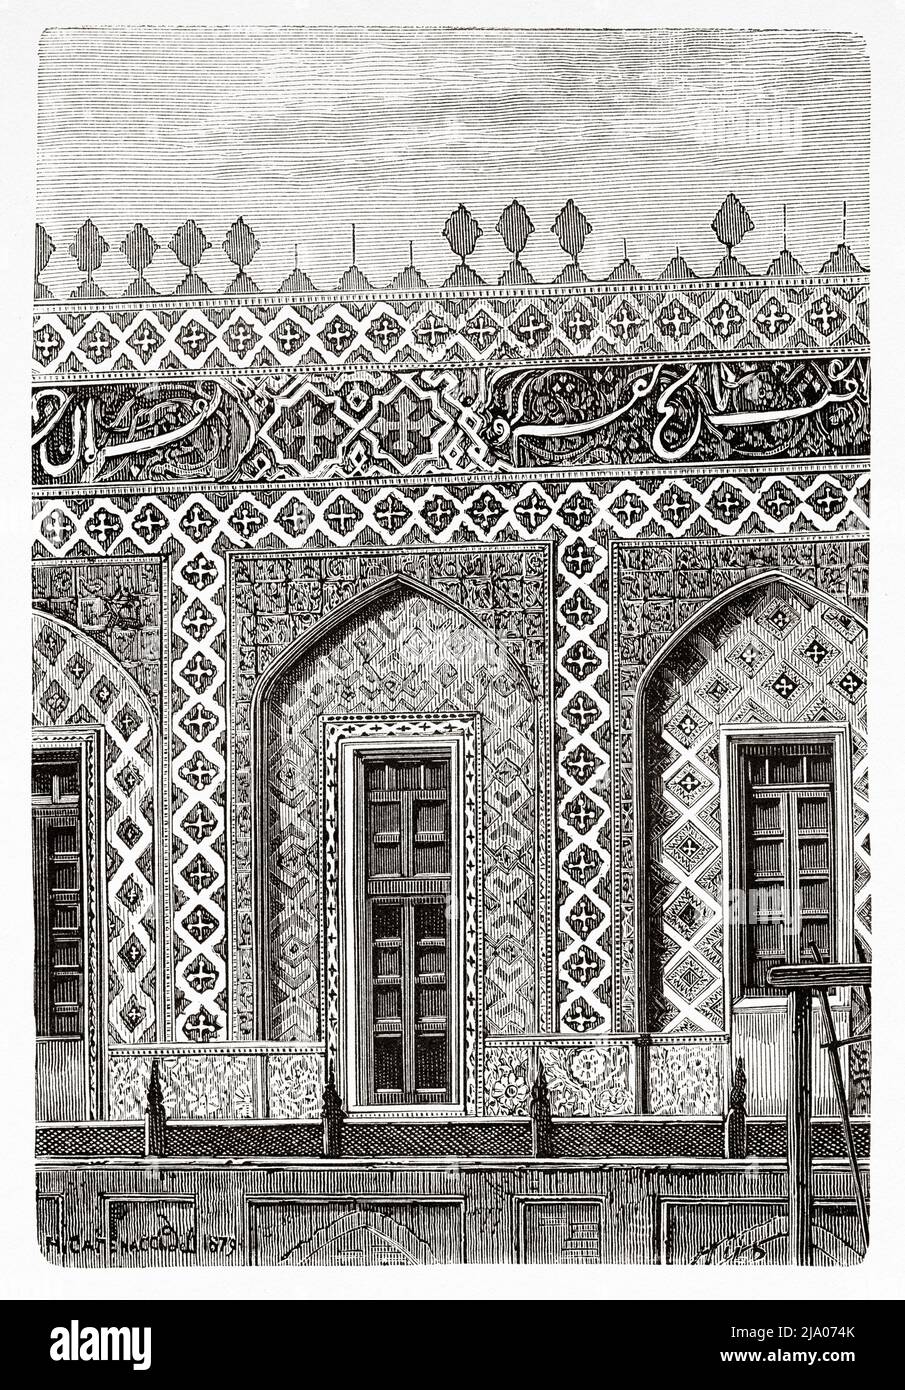 Khudayar Khan Palace, Kokand, Fergana region. Uzbekistan, Central Asia. From Orenburg to Samarkand 1876-1878 by Madame Marie Ujfalvy-Bourdon, Le Tour du Monde 1879 Stock Photo